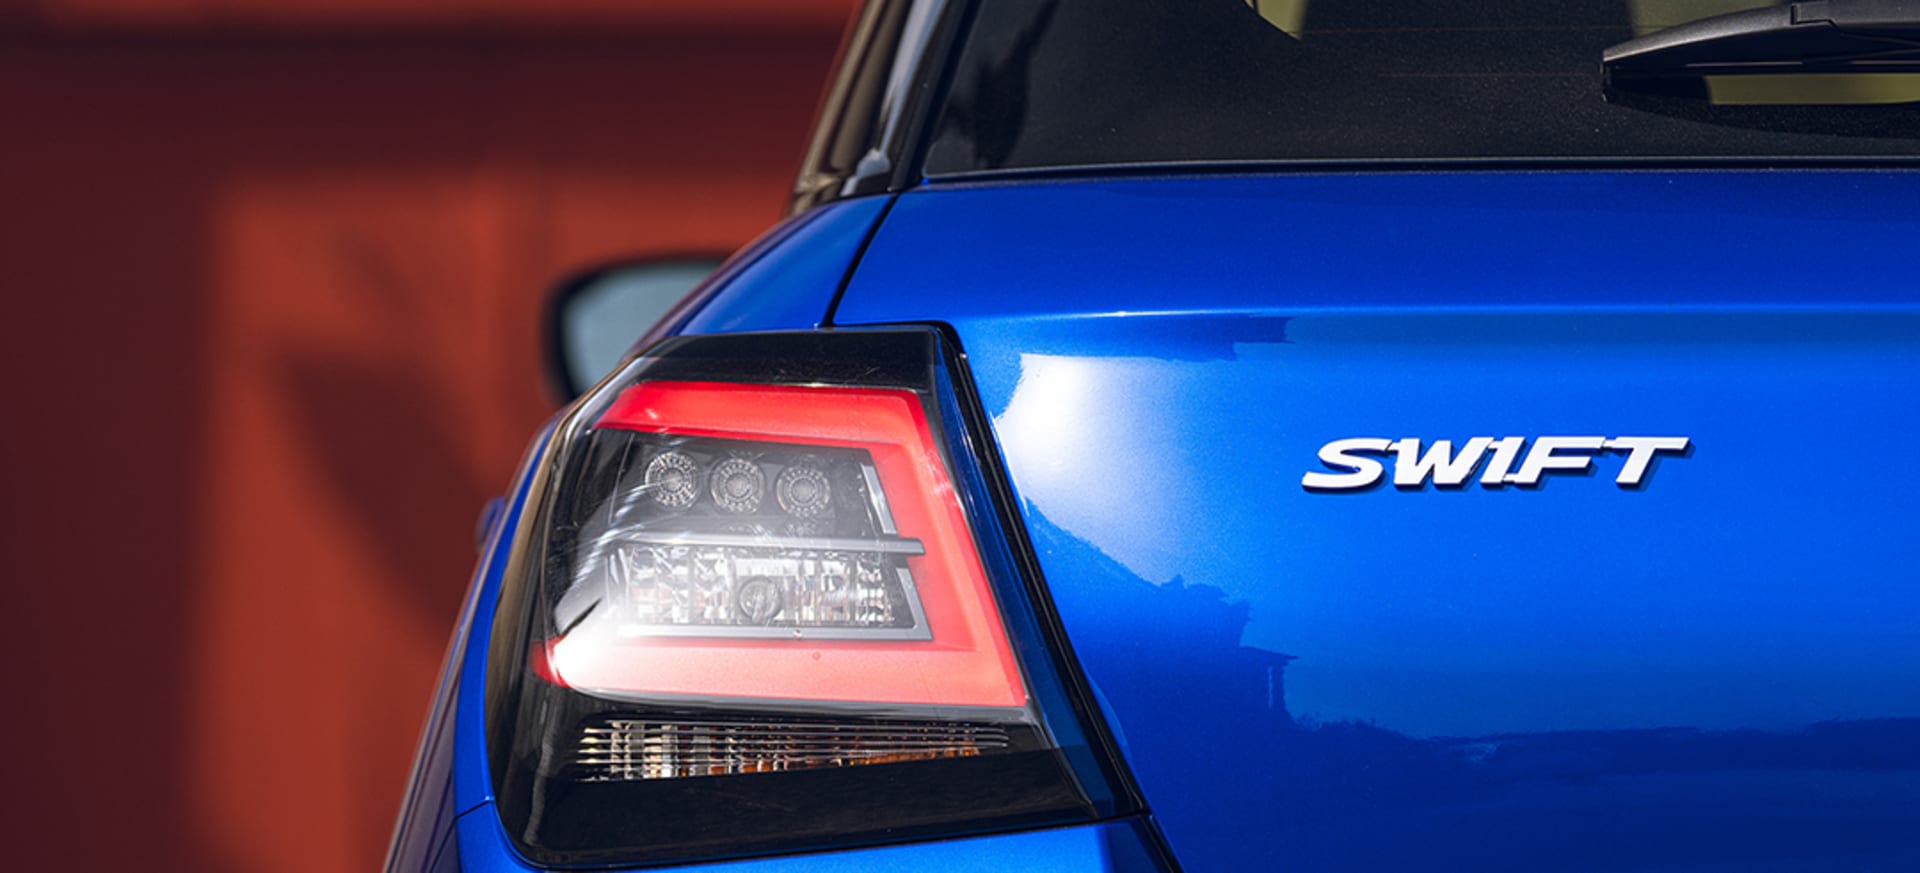 The All-New Suzuki Swift